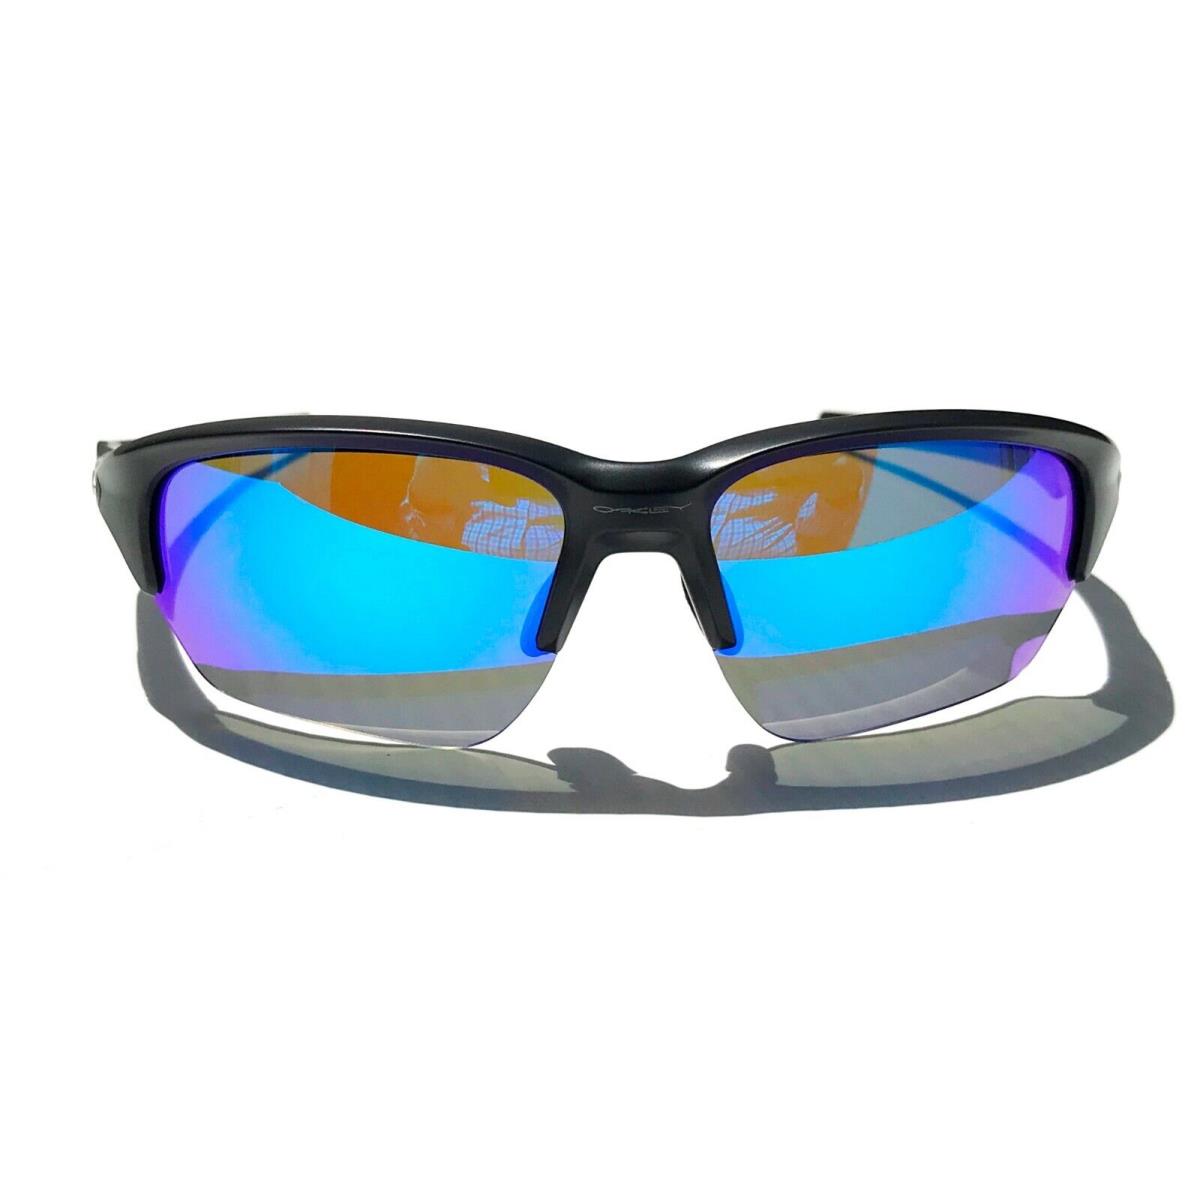 Oakley sunglasses Flak Beta - Black Satin Frame, Blue Lens 7